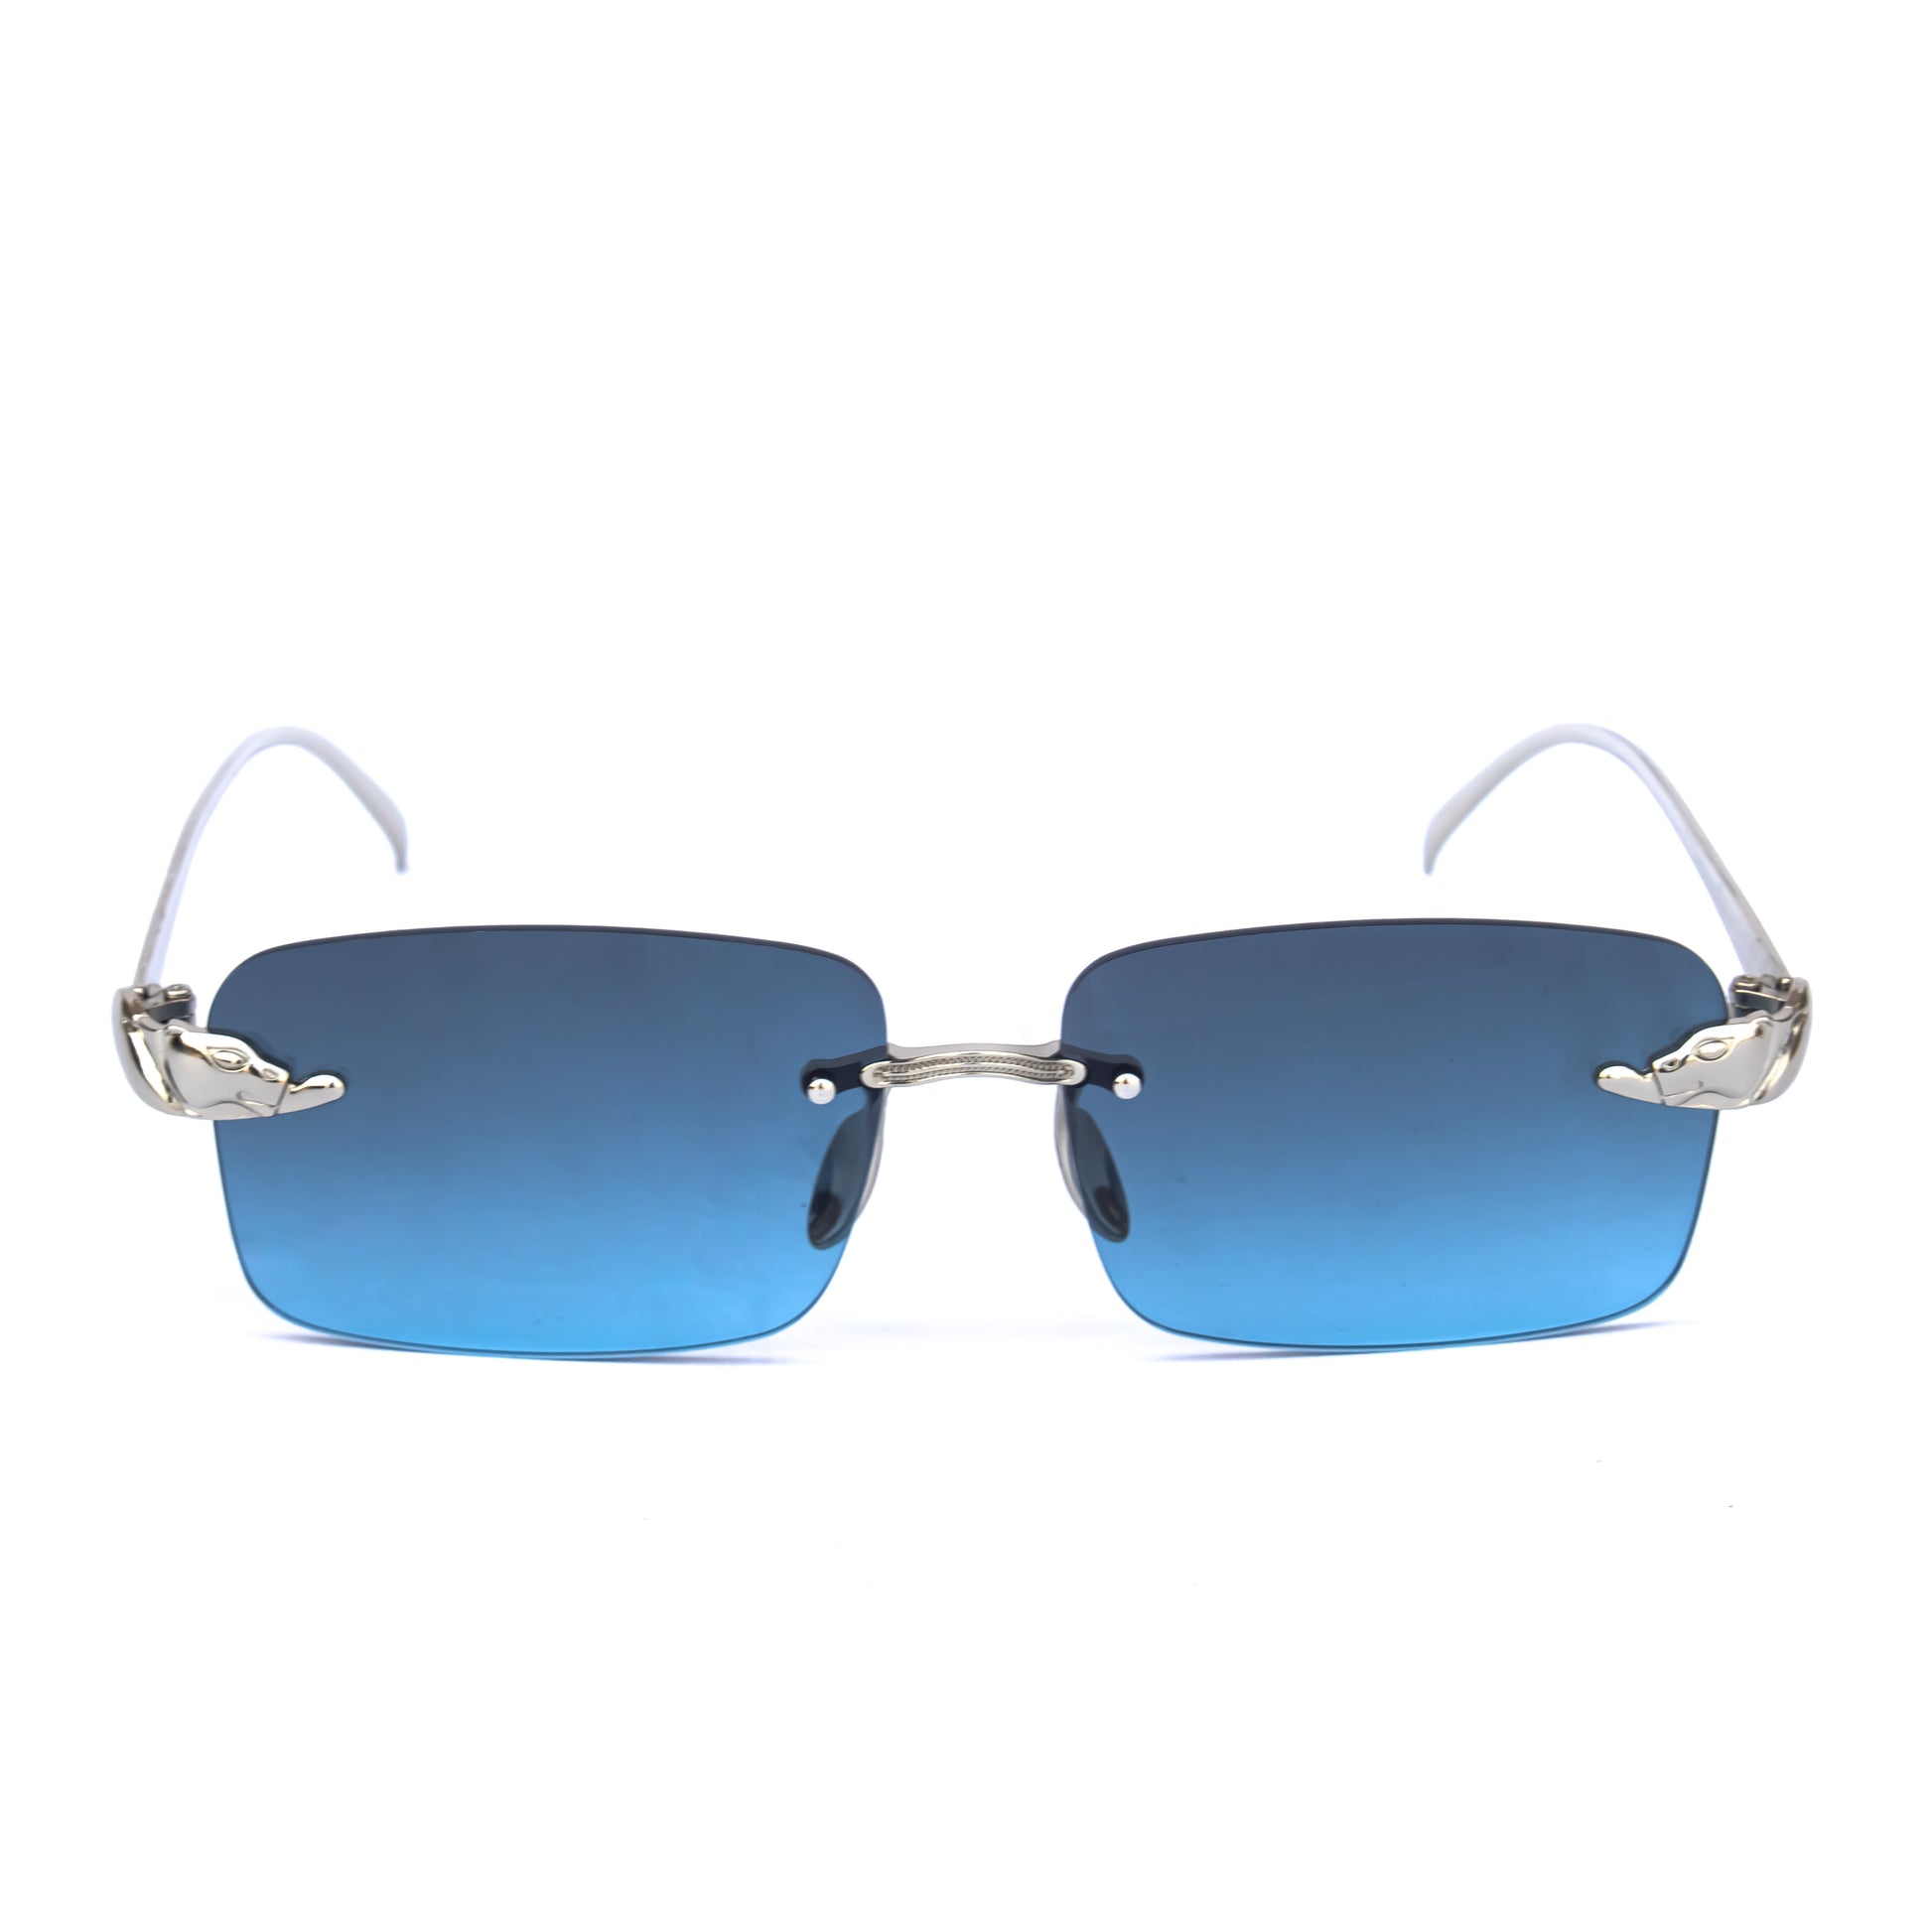 Retro square sunglasses